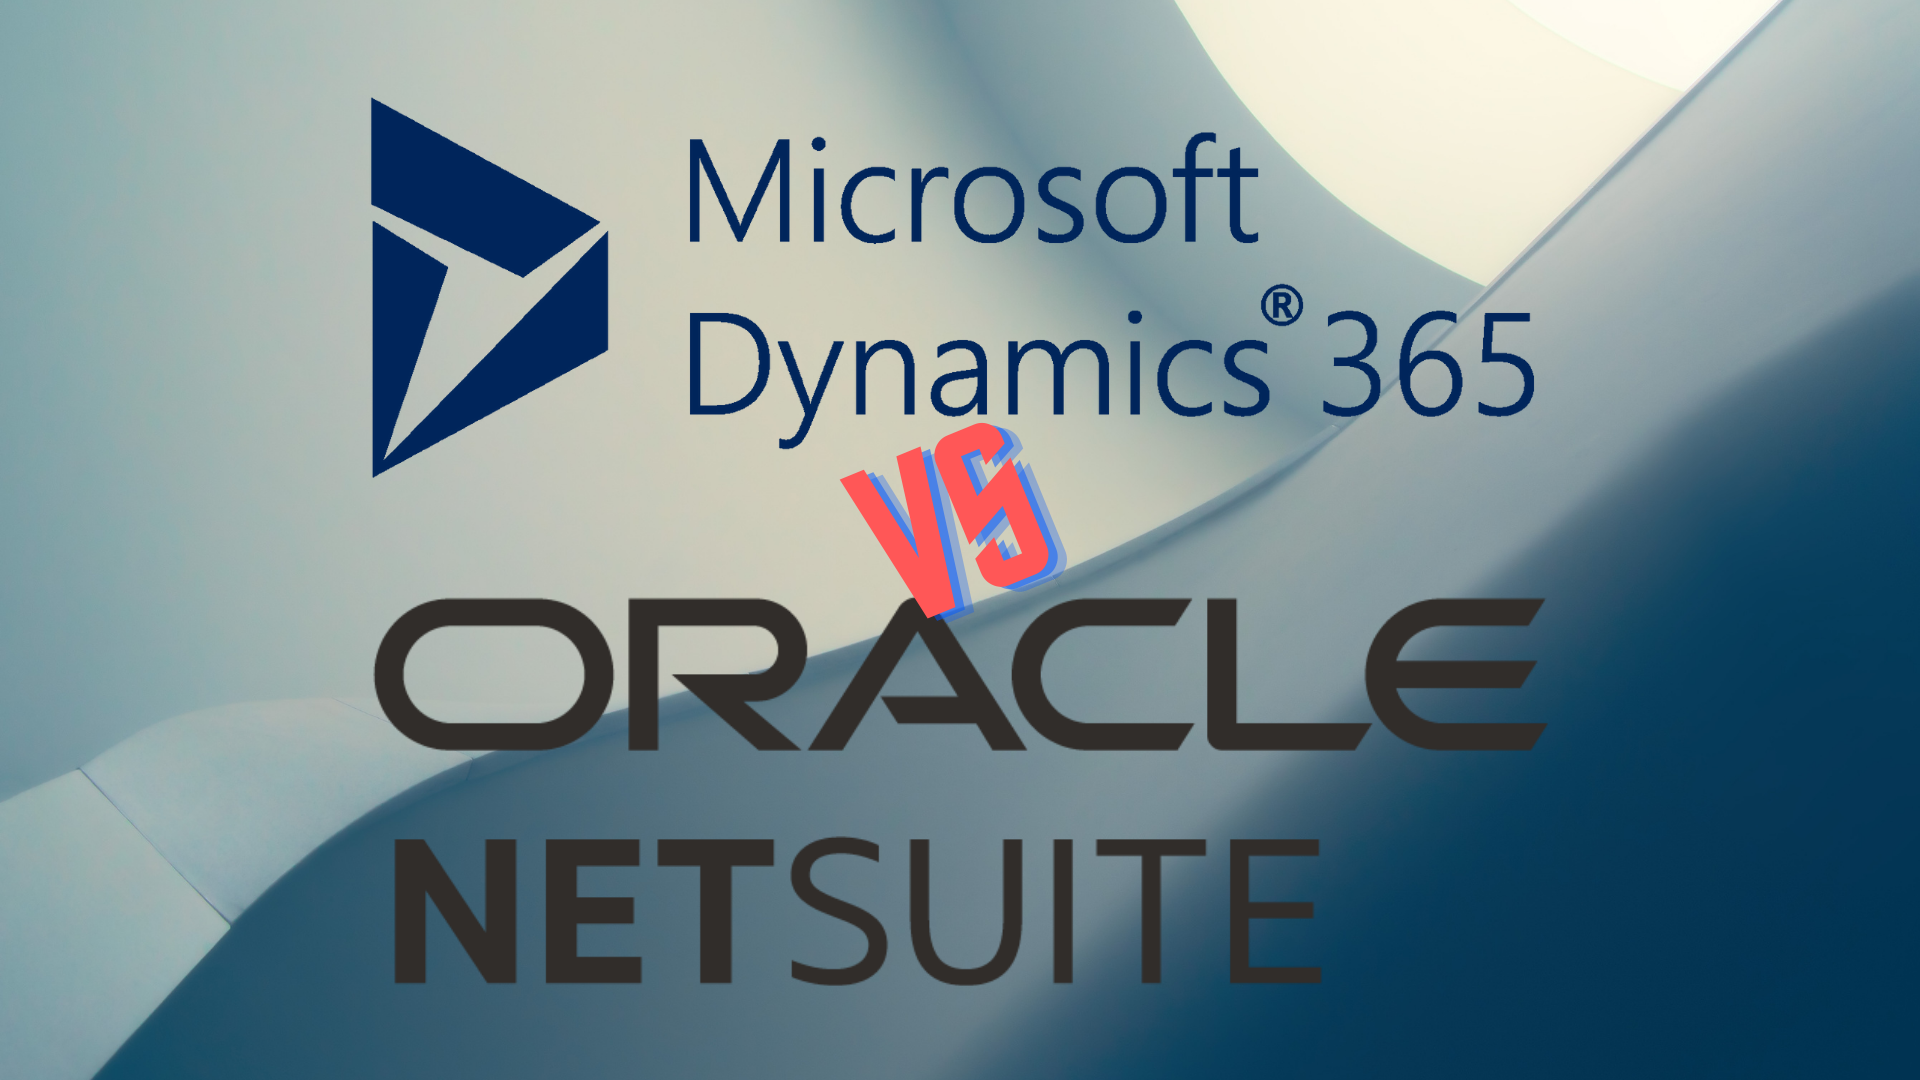 NetSuite vs Microsoft Dynamics